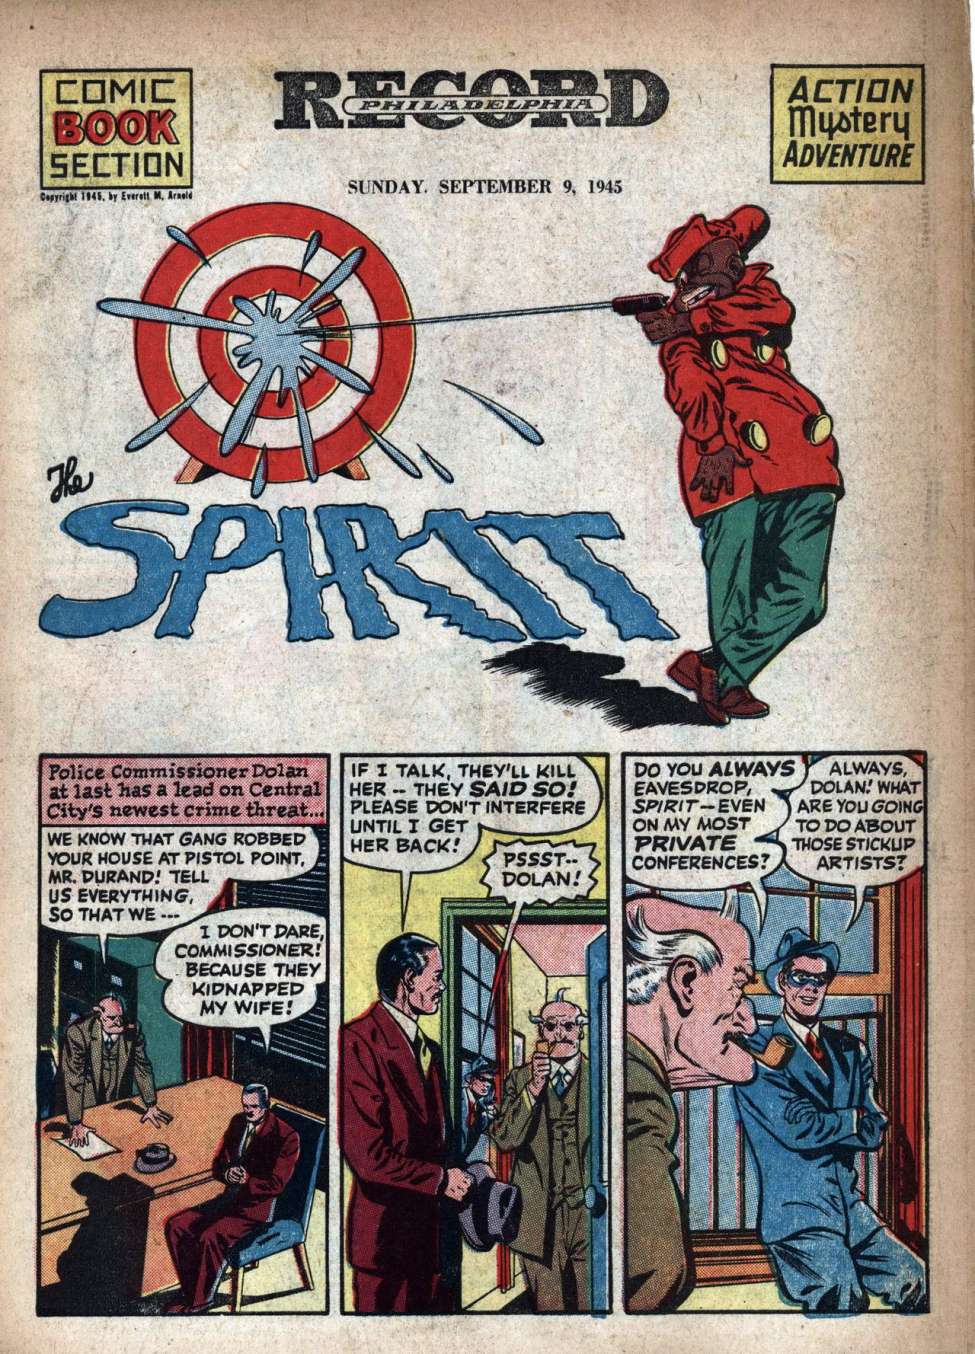 Comic Book Cover For The Spirit (1945-09-09) - Philadelphia Record